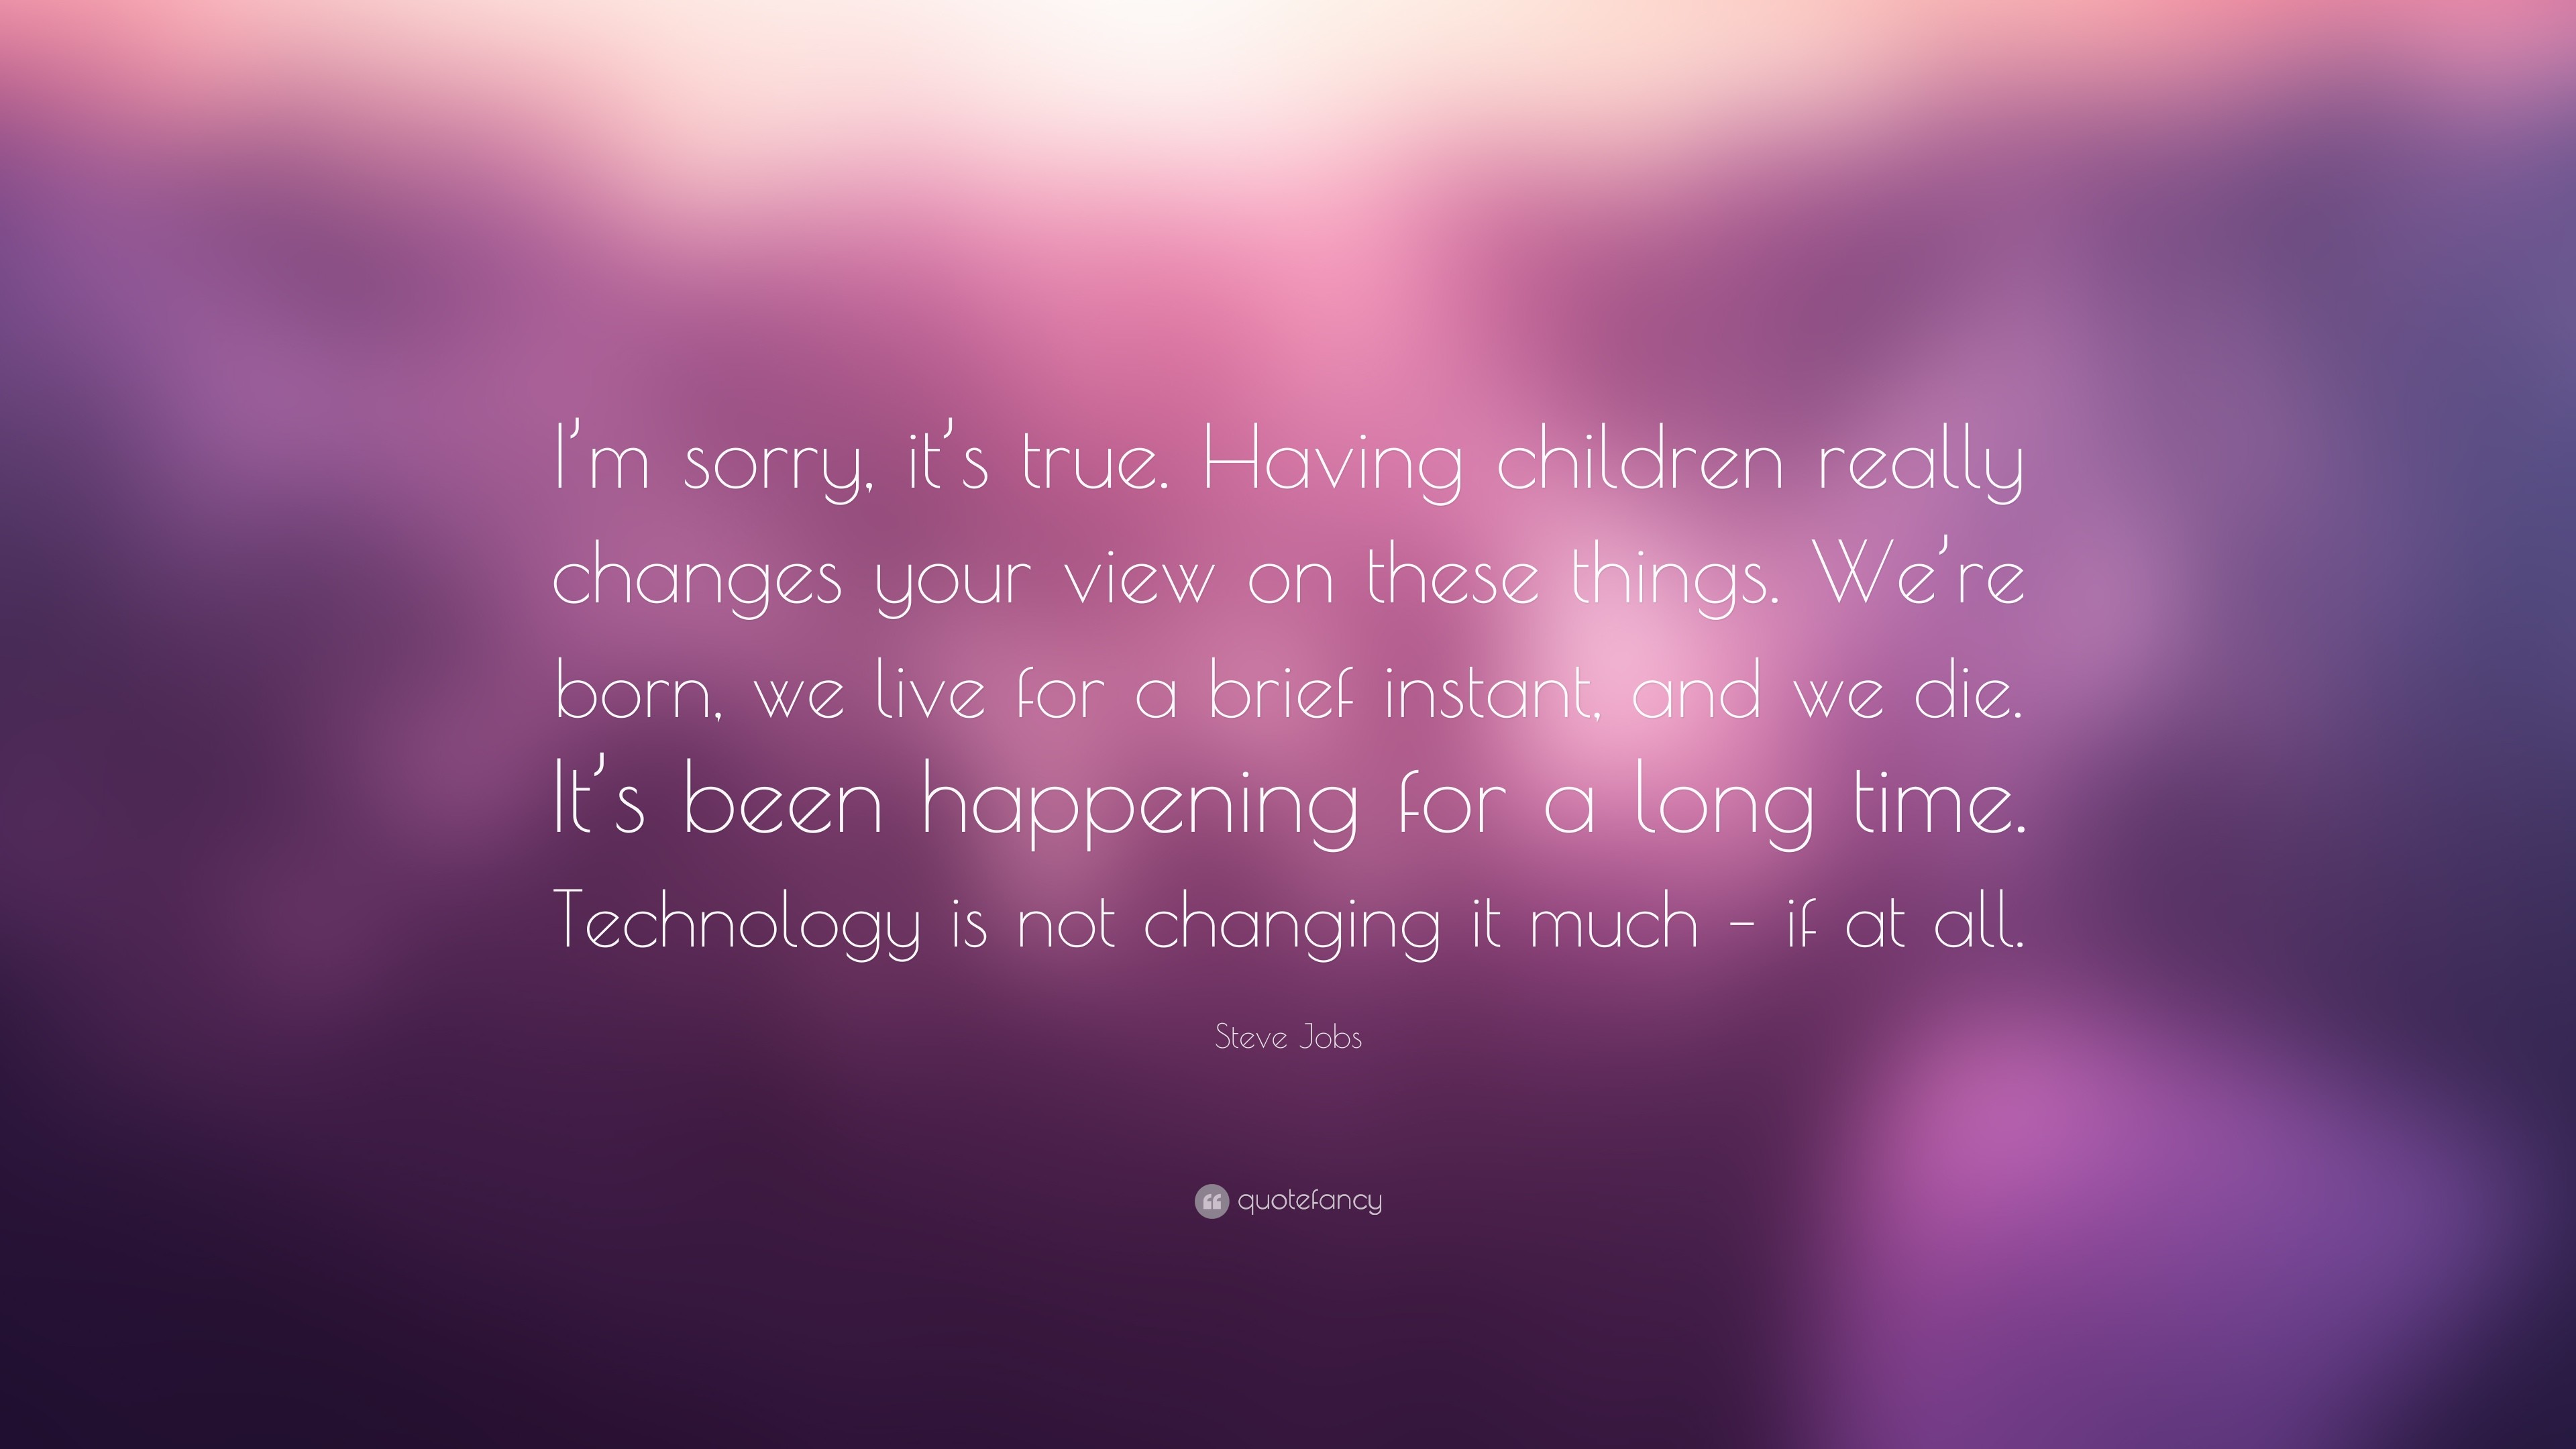 3840x2160 Steve Jobs Quote: “I'm sorry, it's true. Having children really